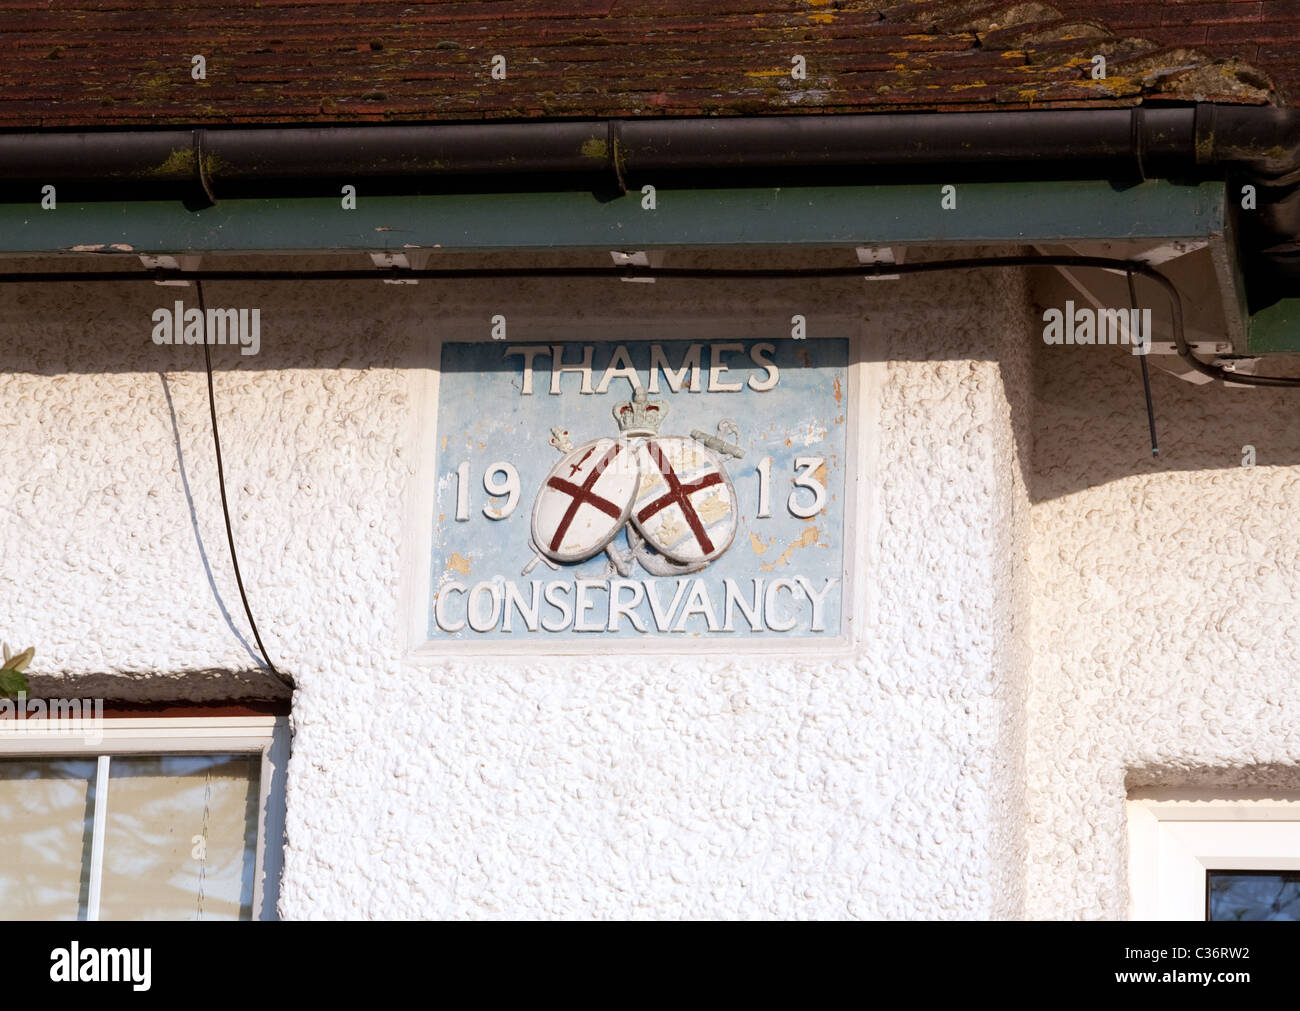 1913 Thames Conservancy firmar en una antigua casa de torreros bloqueo Wallingford, Oxfordshire, REINO UNIDO Foto de stock